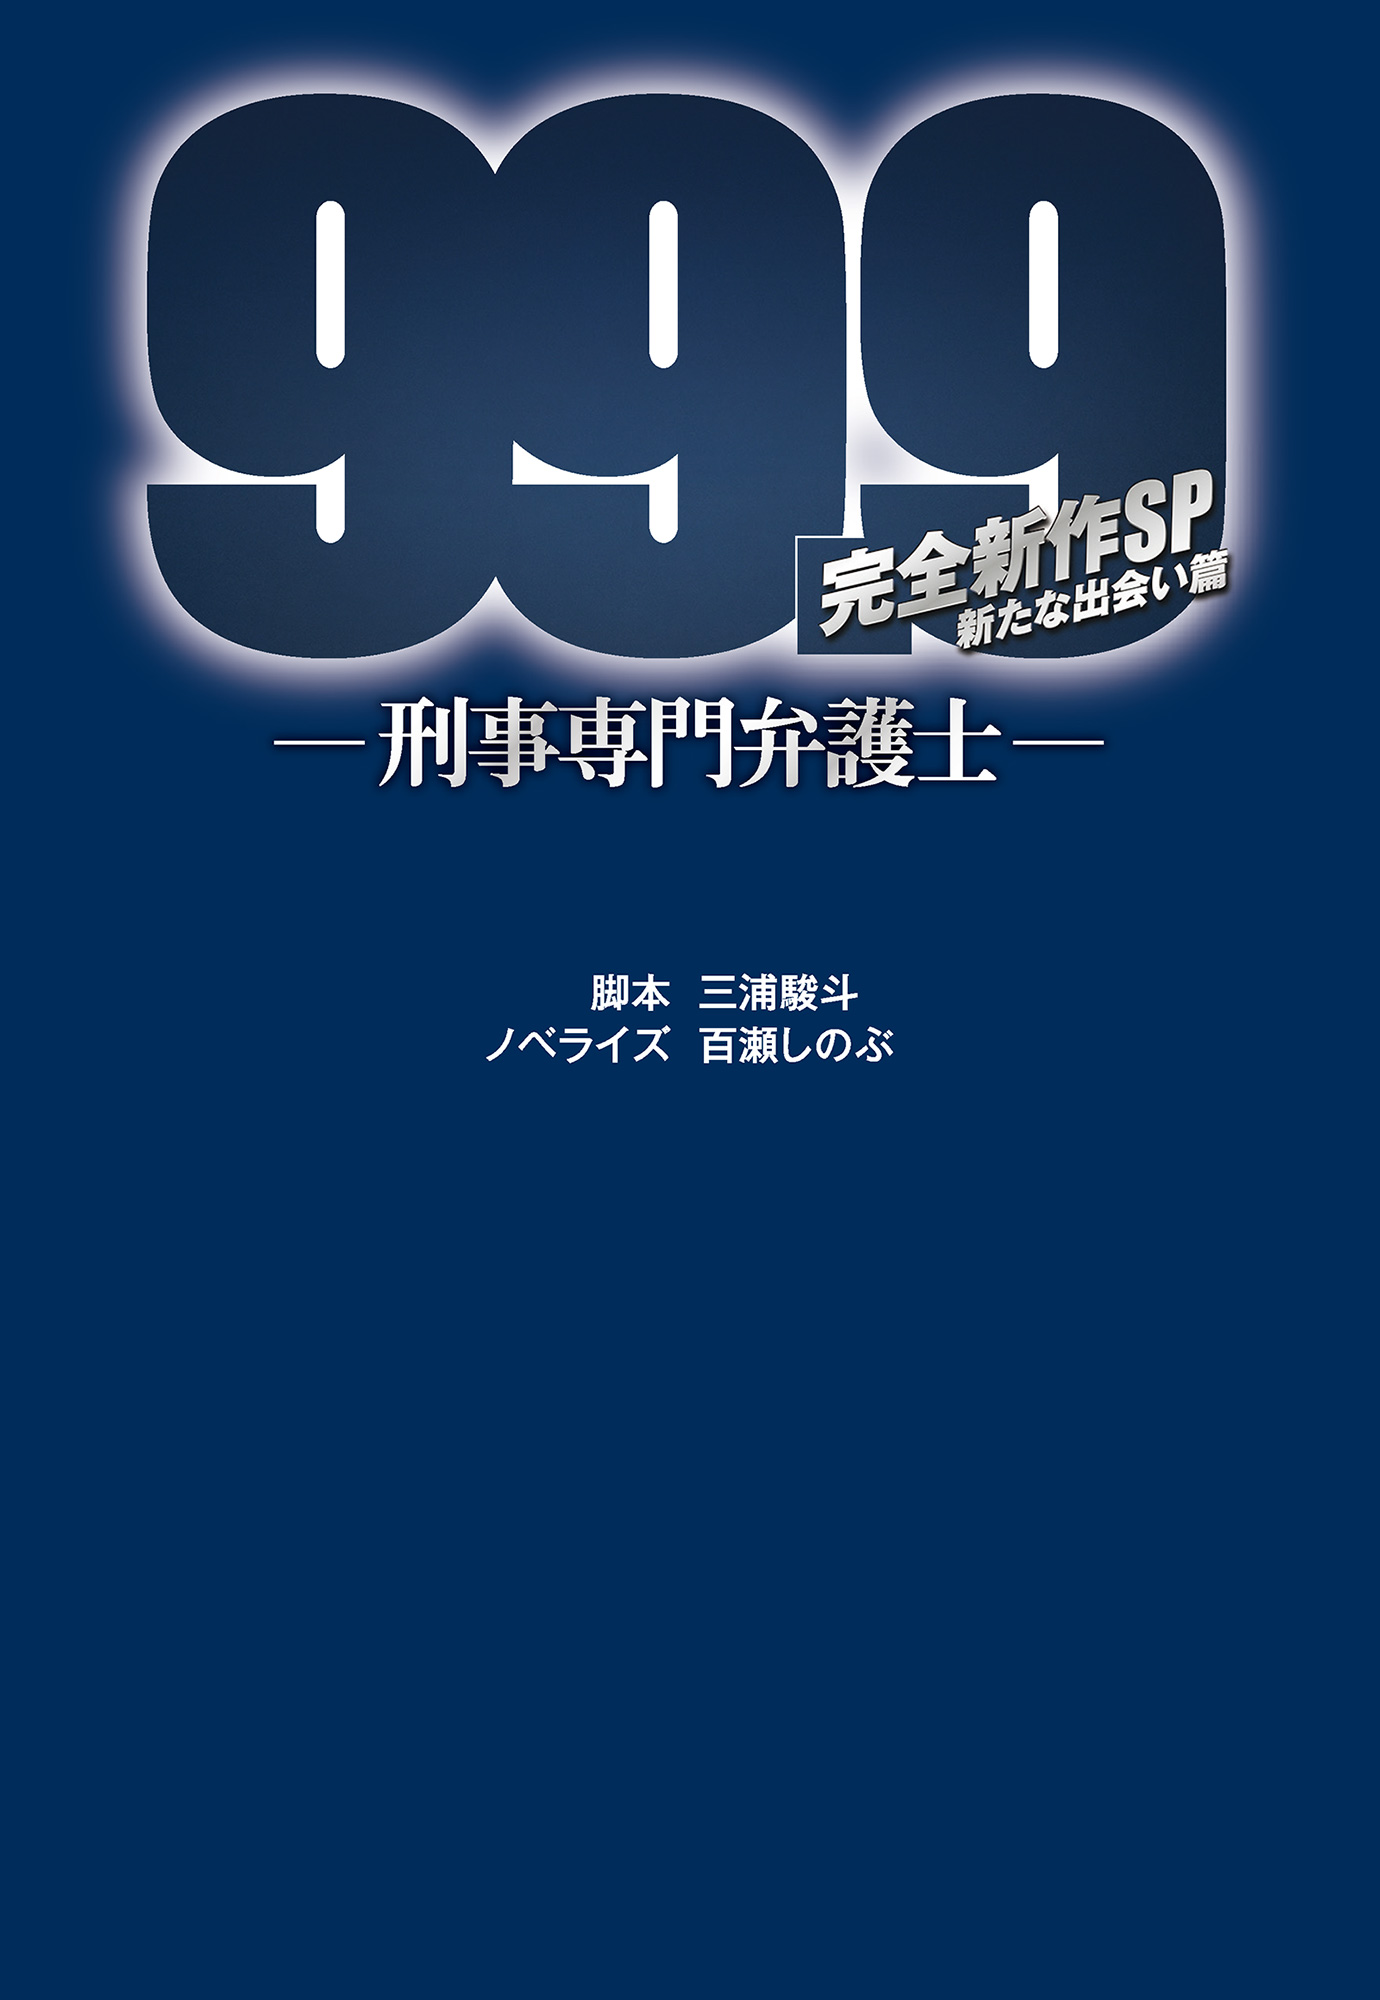 99.9－刑事専門弁護士－ 完全新作SP 新たな出会い篇 - 三浦駿斗/百瀬